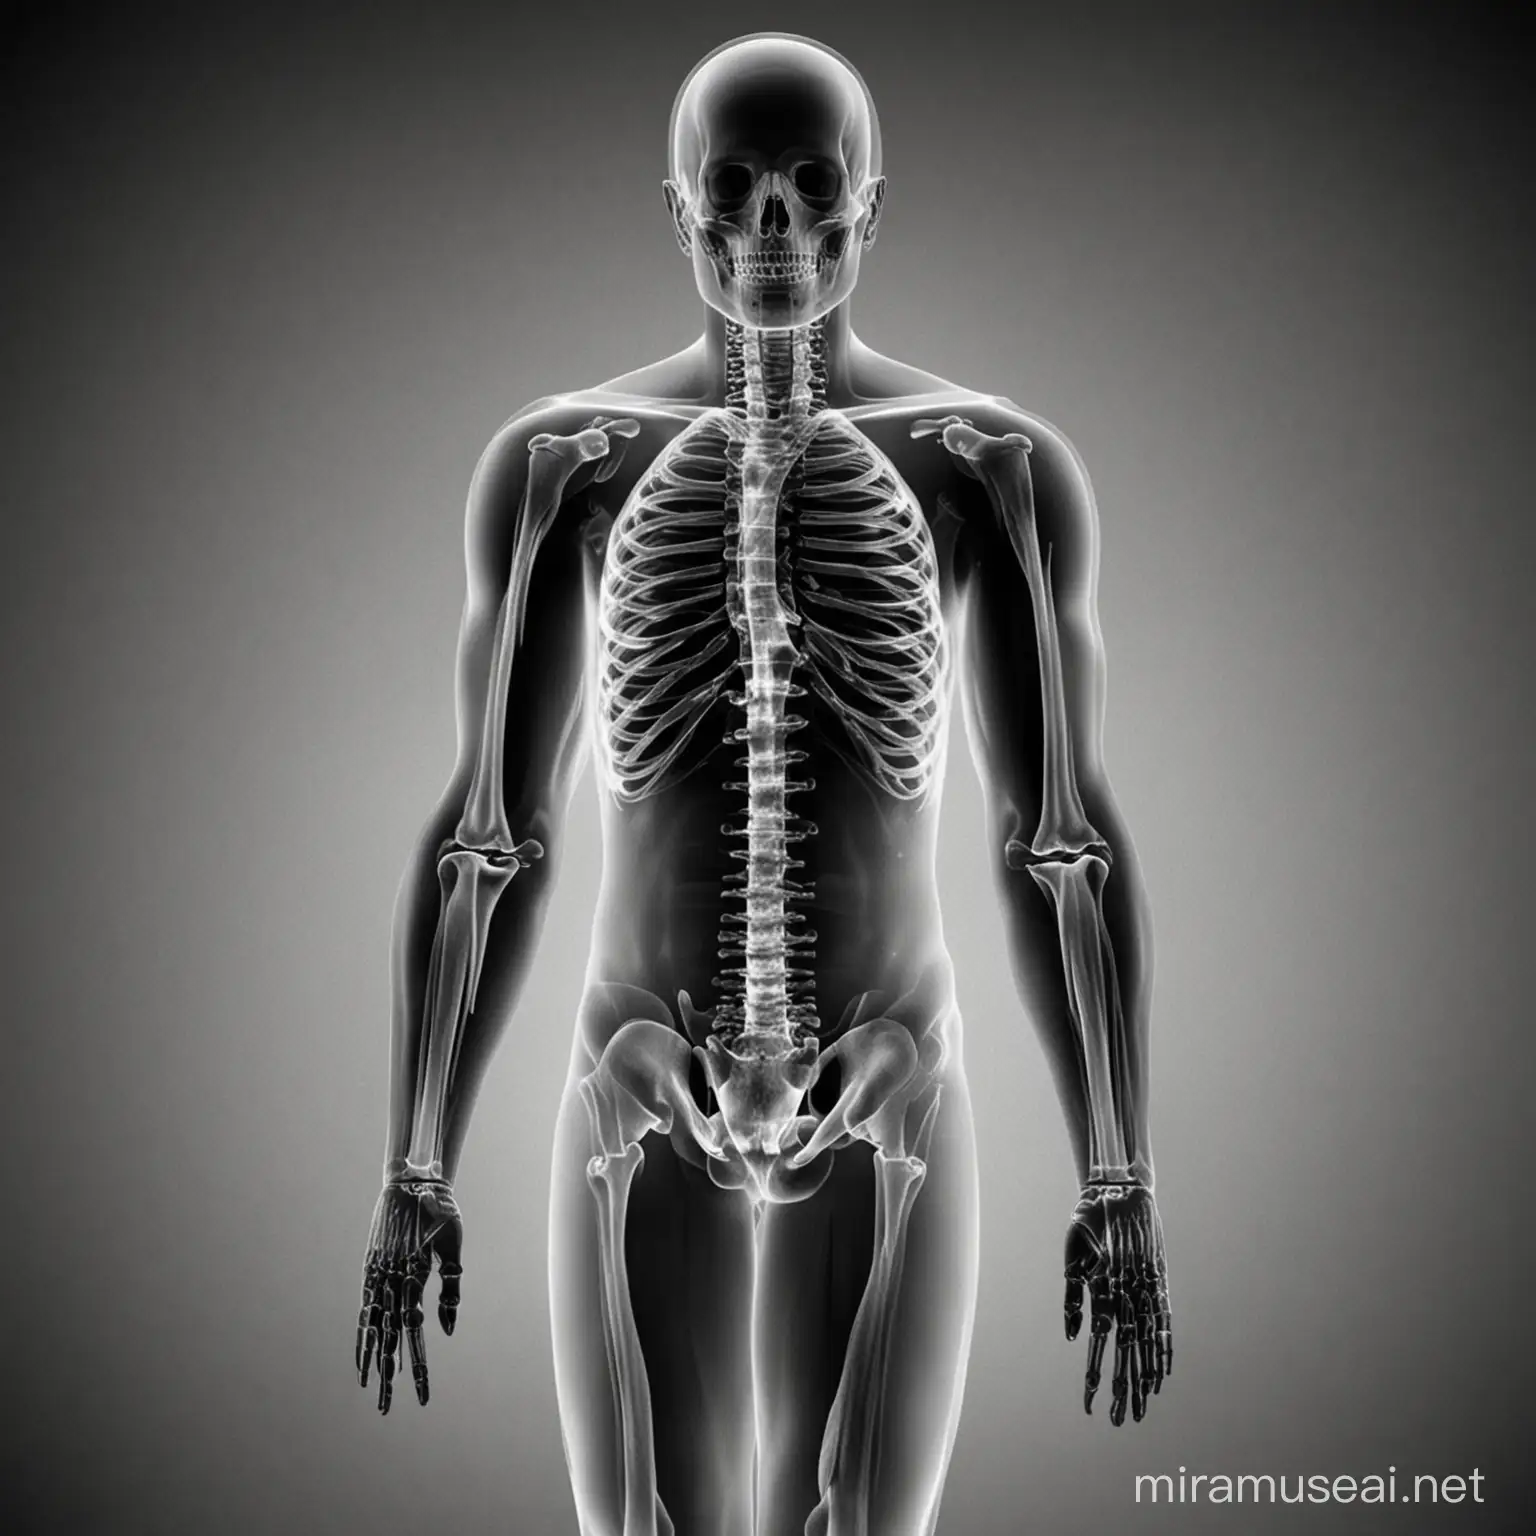 Full Body XRay Scan Revealing Internal Anatomy